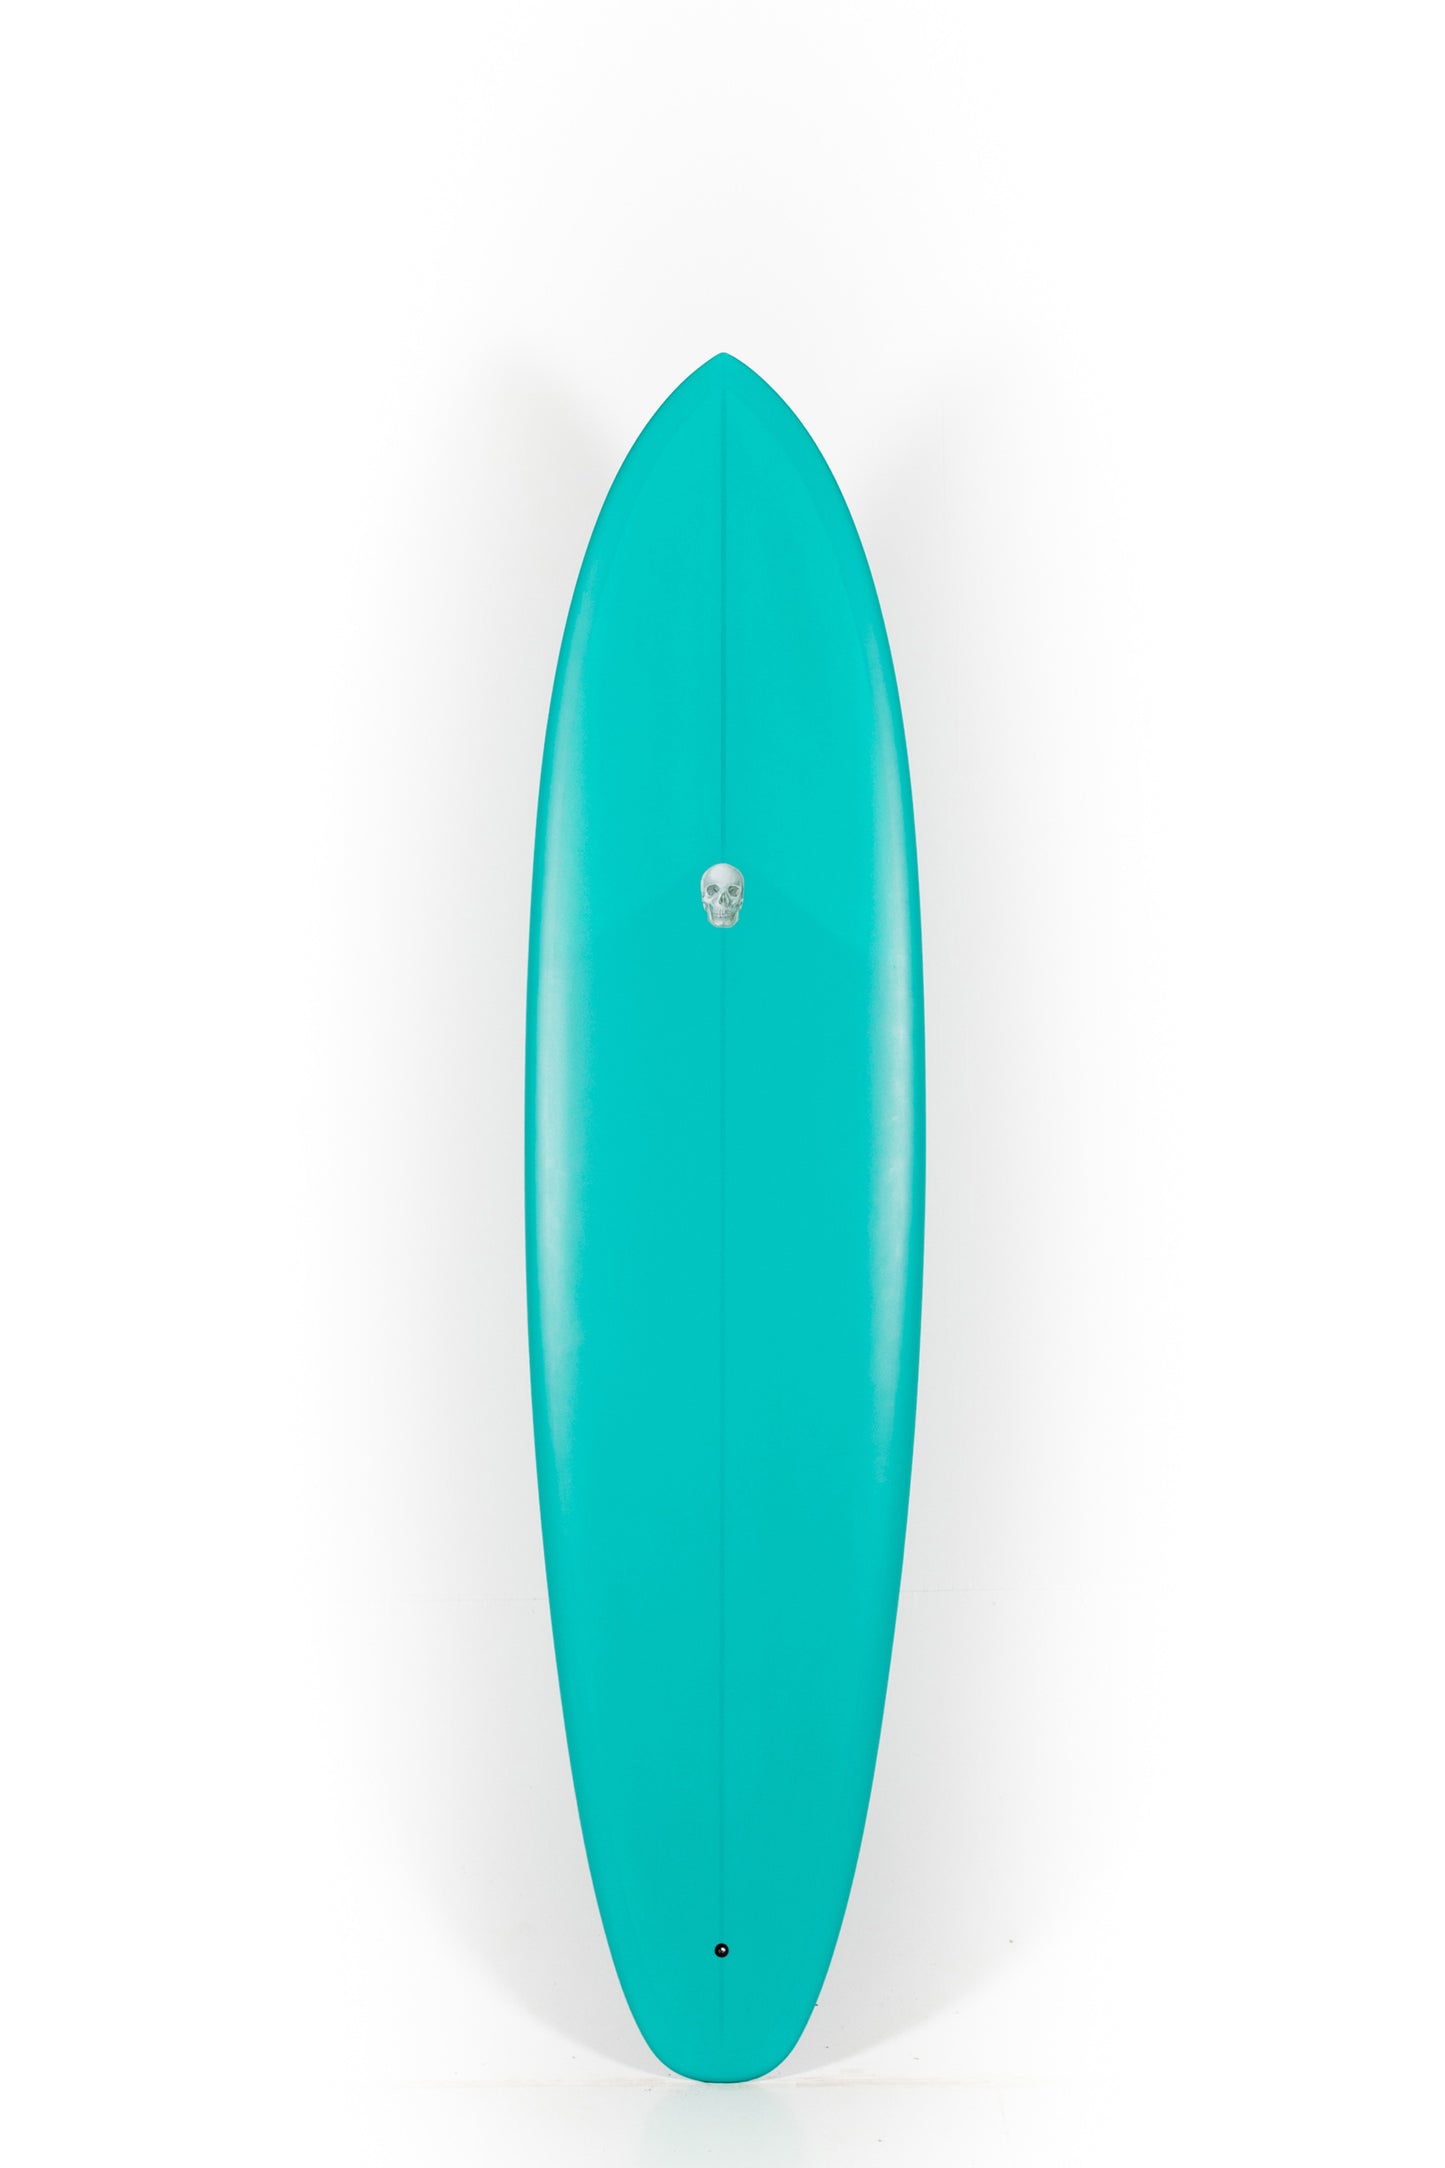 Pukas Surf Shop - Christenson Surfboards - FLAT TRACKER 2.0 - 7'6" x 21 1/4 x 2 7/8 - CX03152